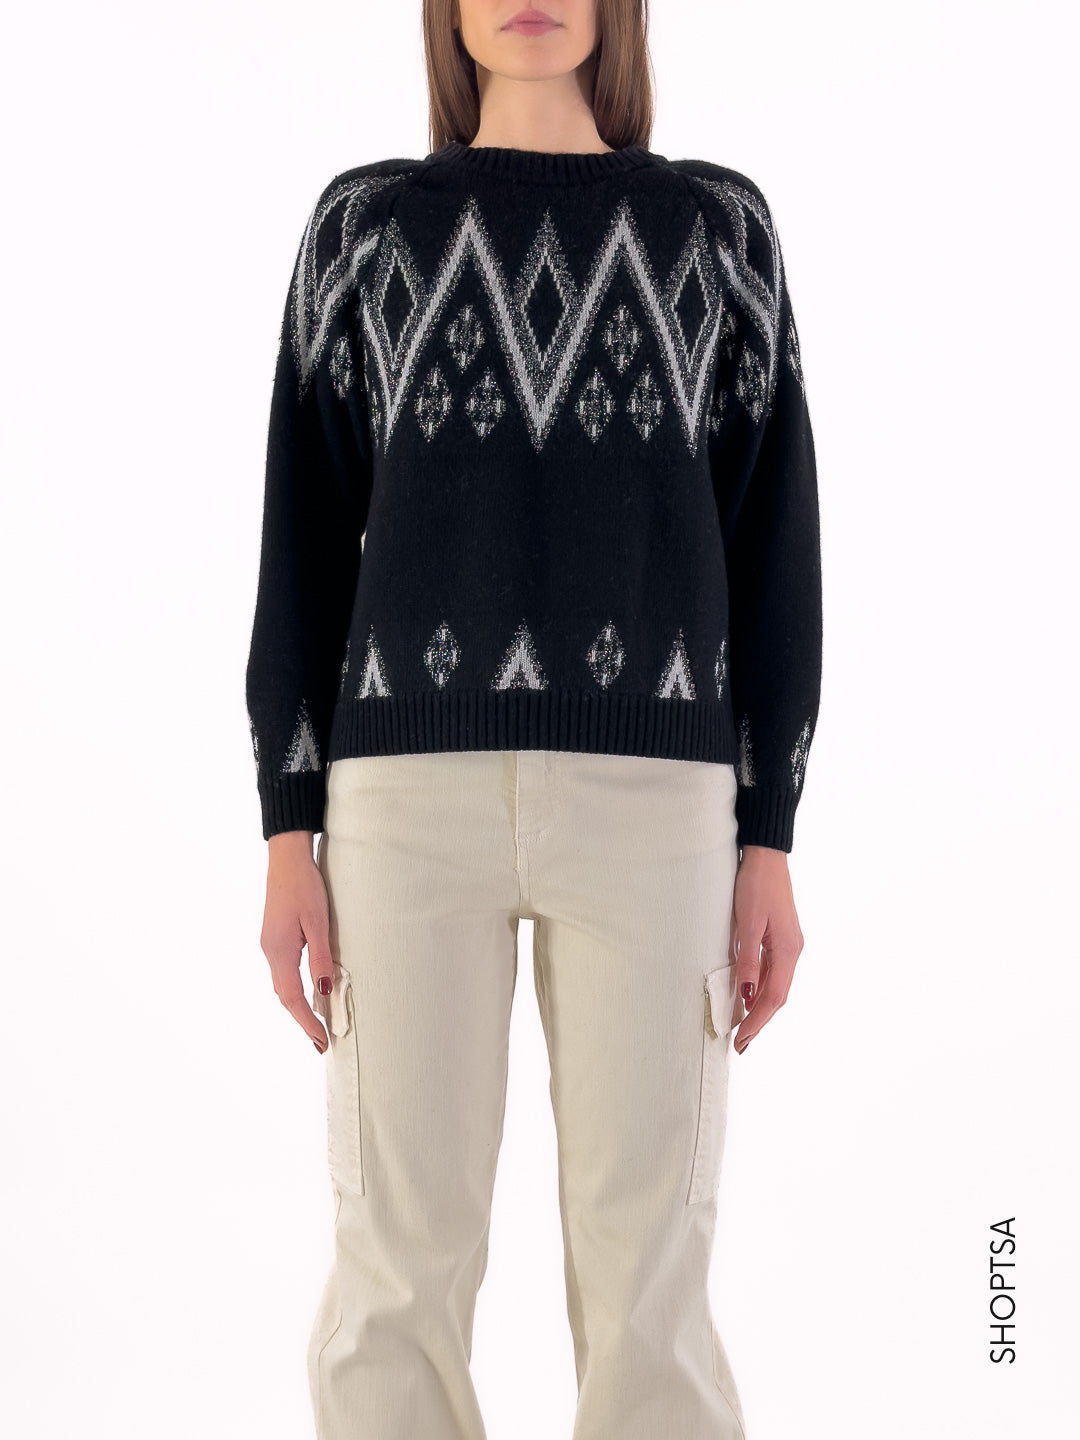 Xmas sweater 77076r - ViCOLO